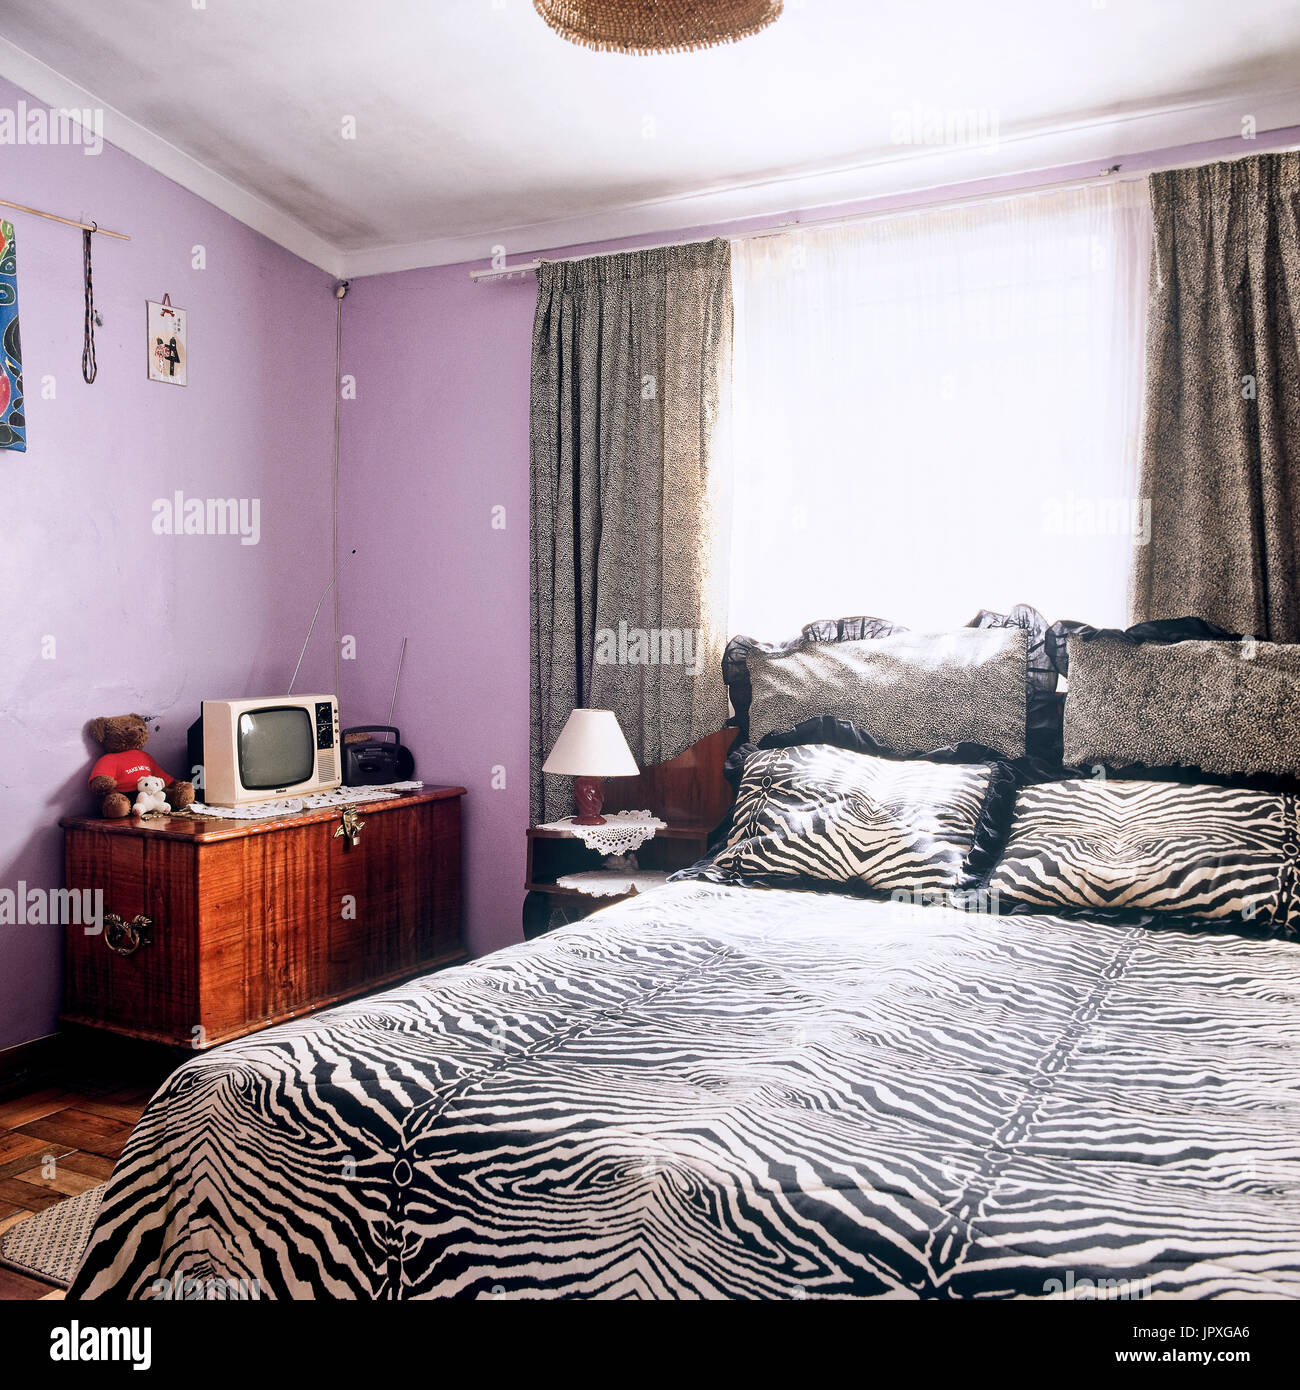 Bedroom with zebra skin pattern bedding Stock Photo